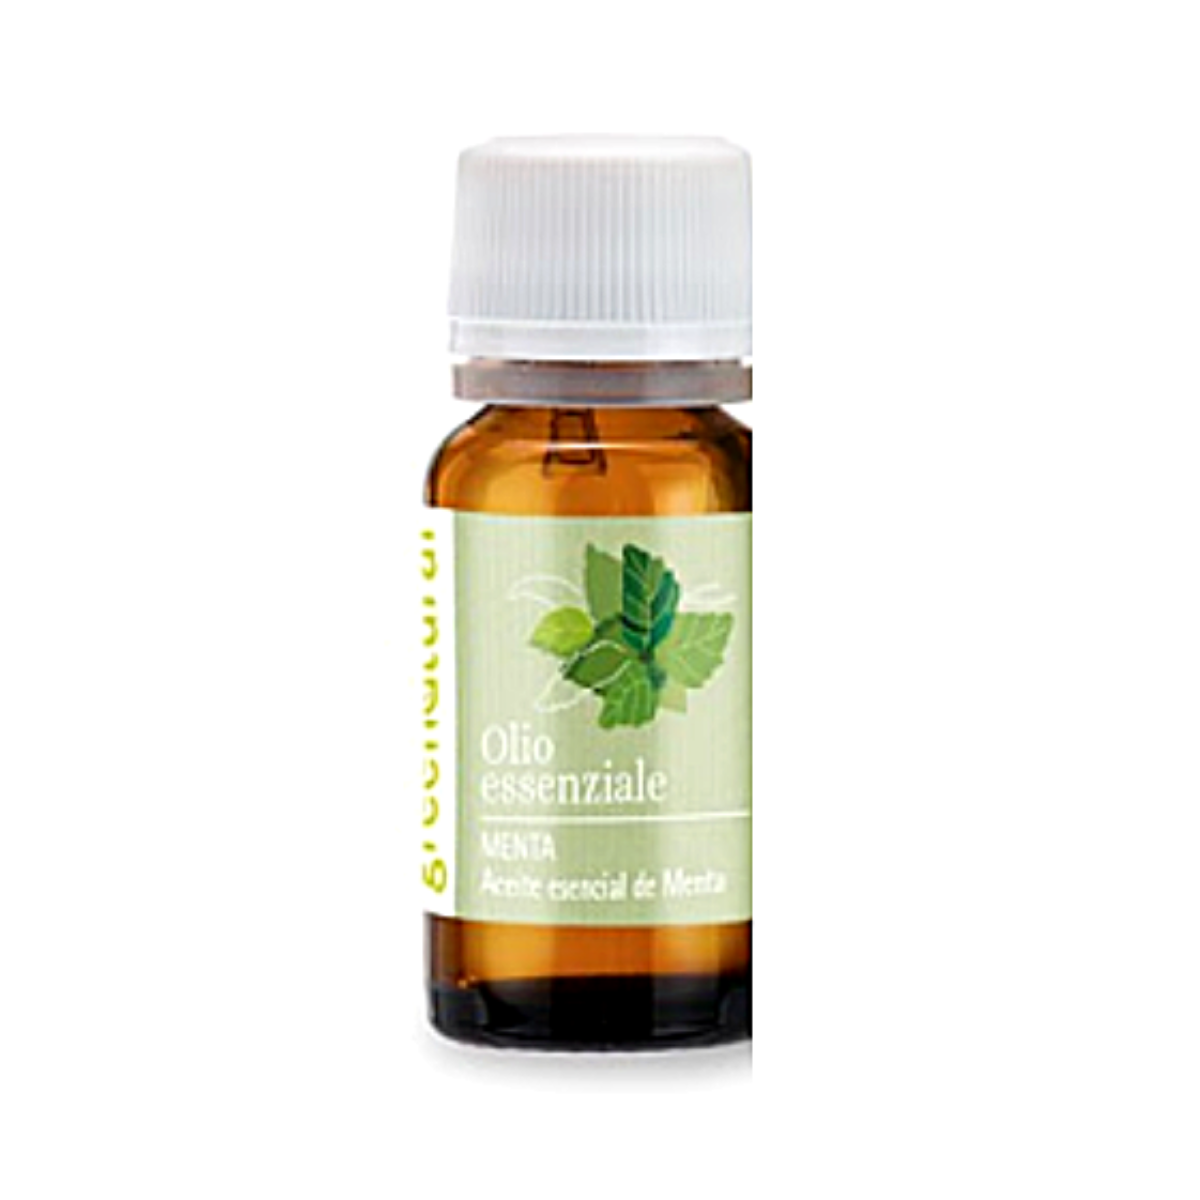 Greenatural - olio essenziale menta, 10ml